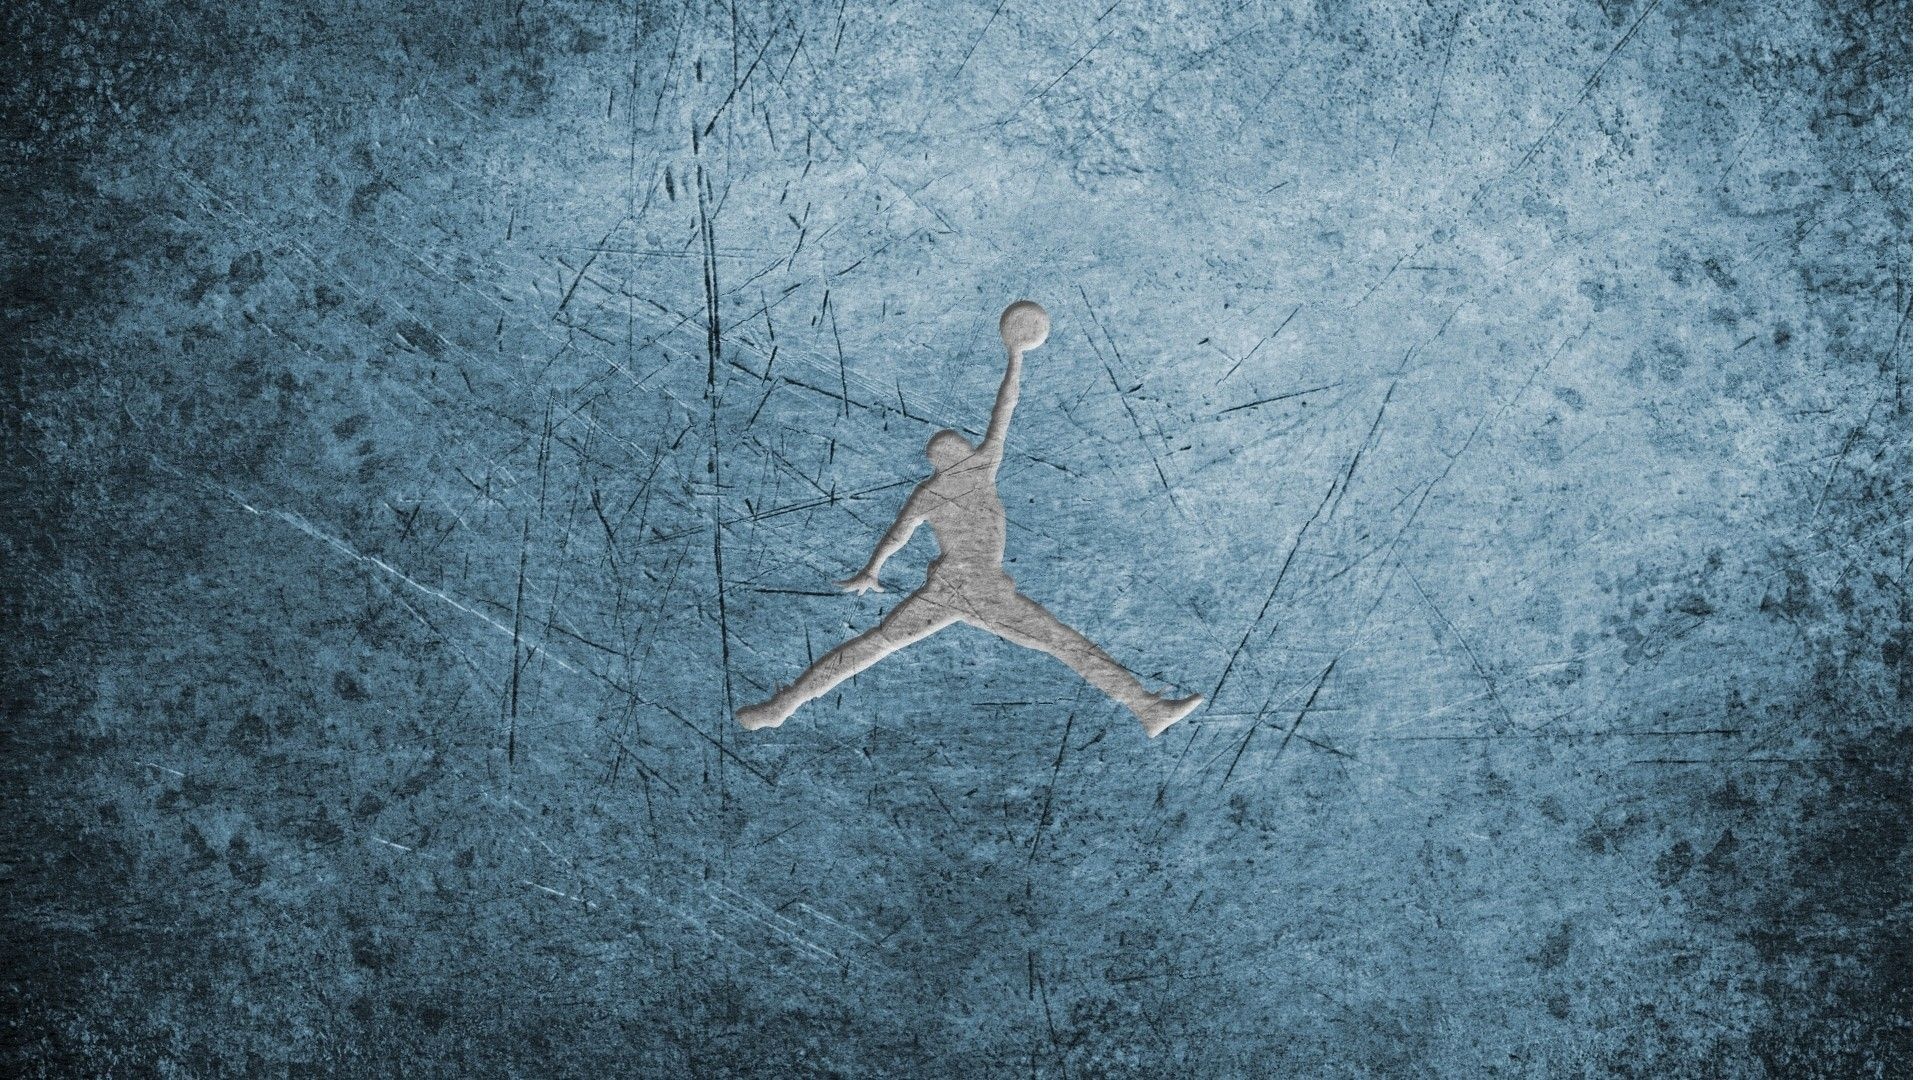 Jumpman Logo, Air Jordan shoes, Brand wallpapers, Sports fashion, 1920x1080 Full HD Desktop